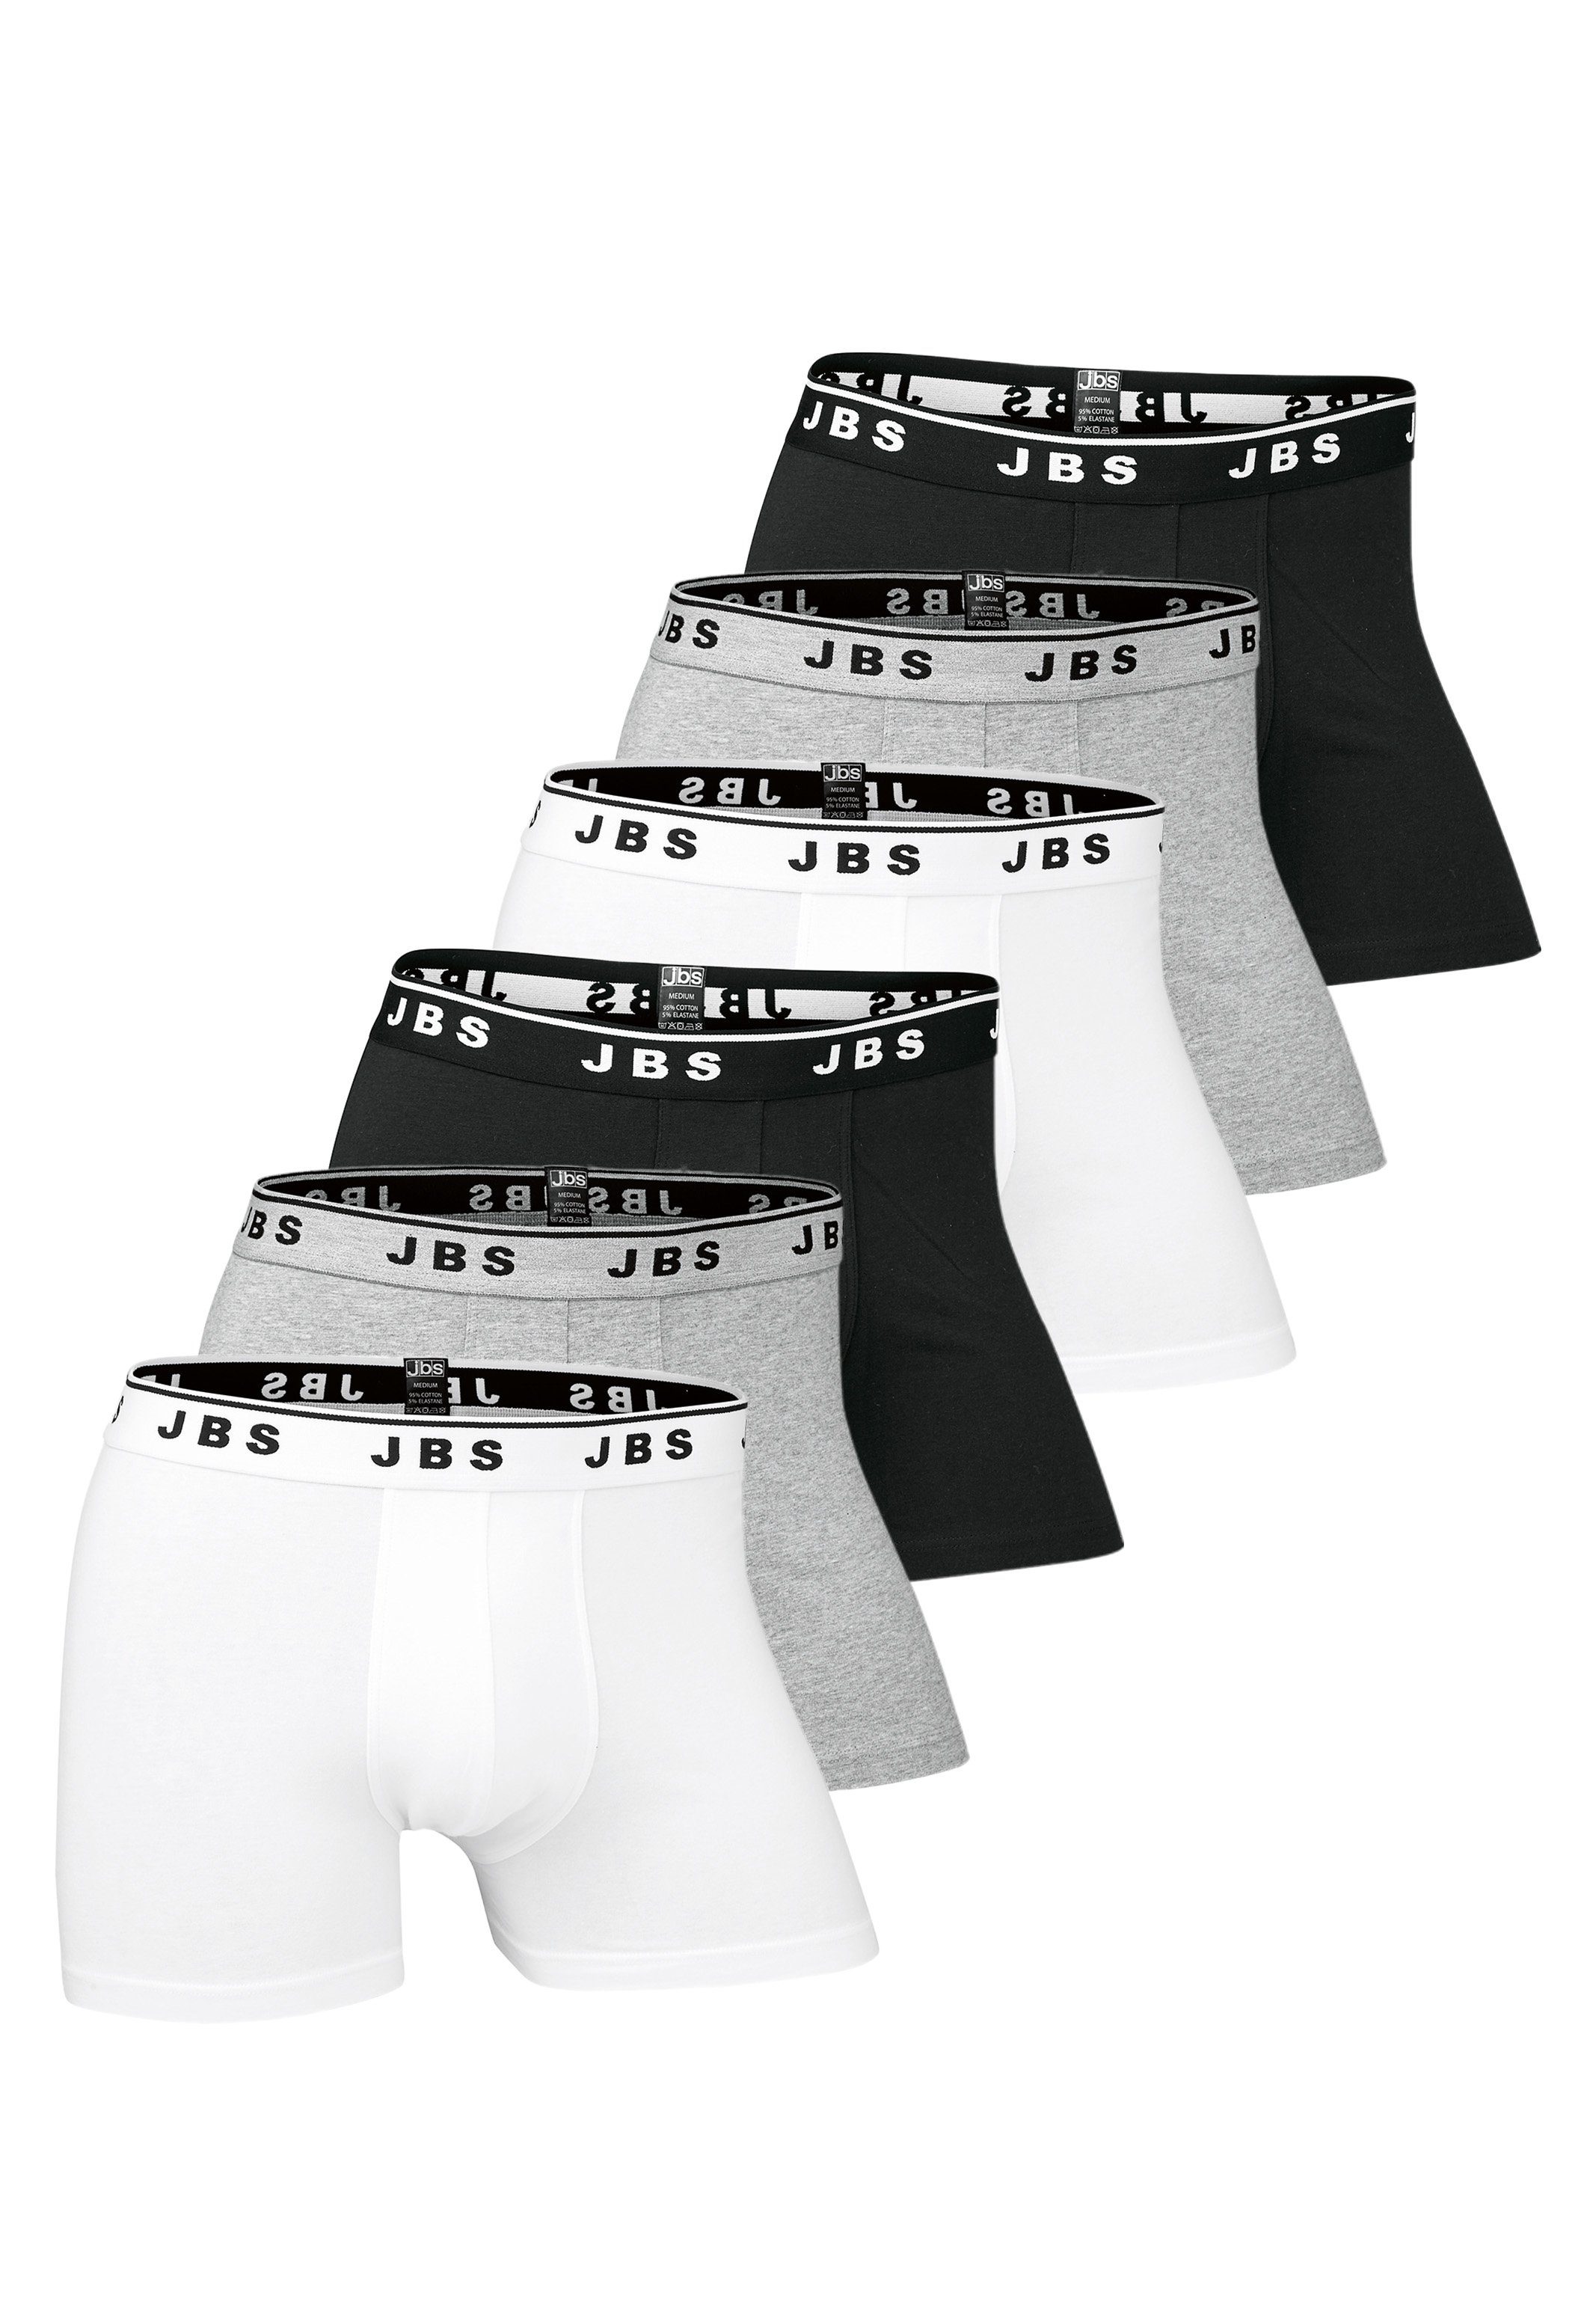 jbs Retro Boxer 6er Pack Ohne Atmungsaktiv Cotton / - Eingriff Long Short - Pant Organic / Grau Baumwolle 6-St) Weiß - / Schwarz (Spar-Set